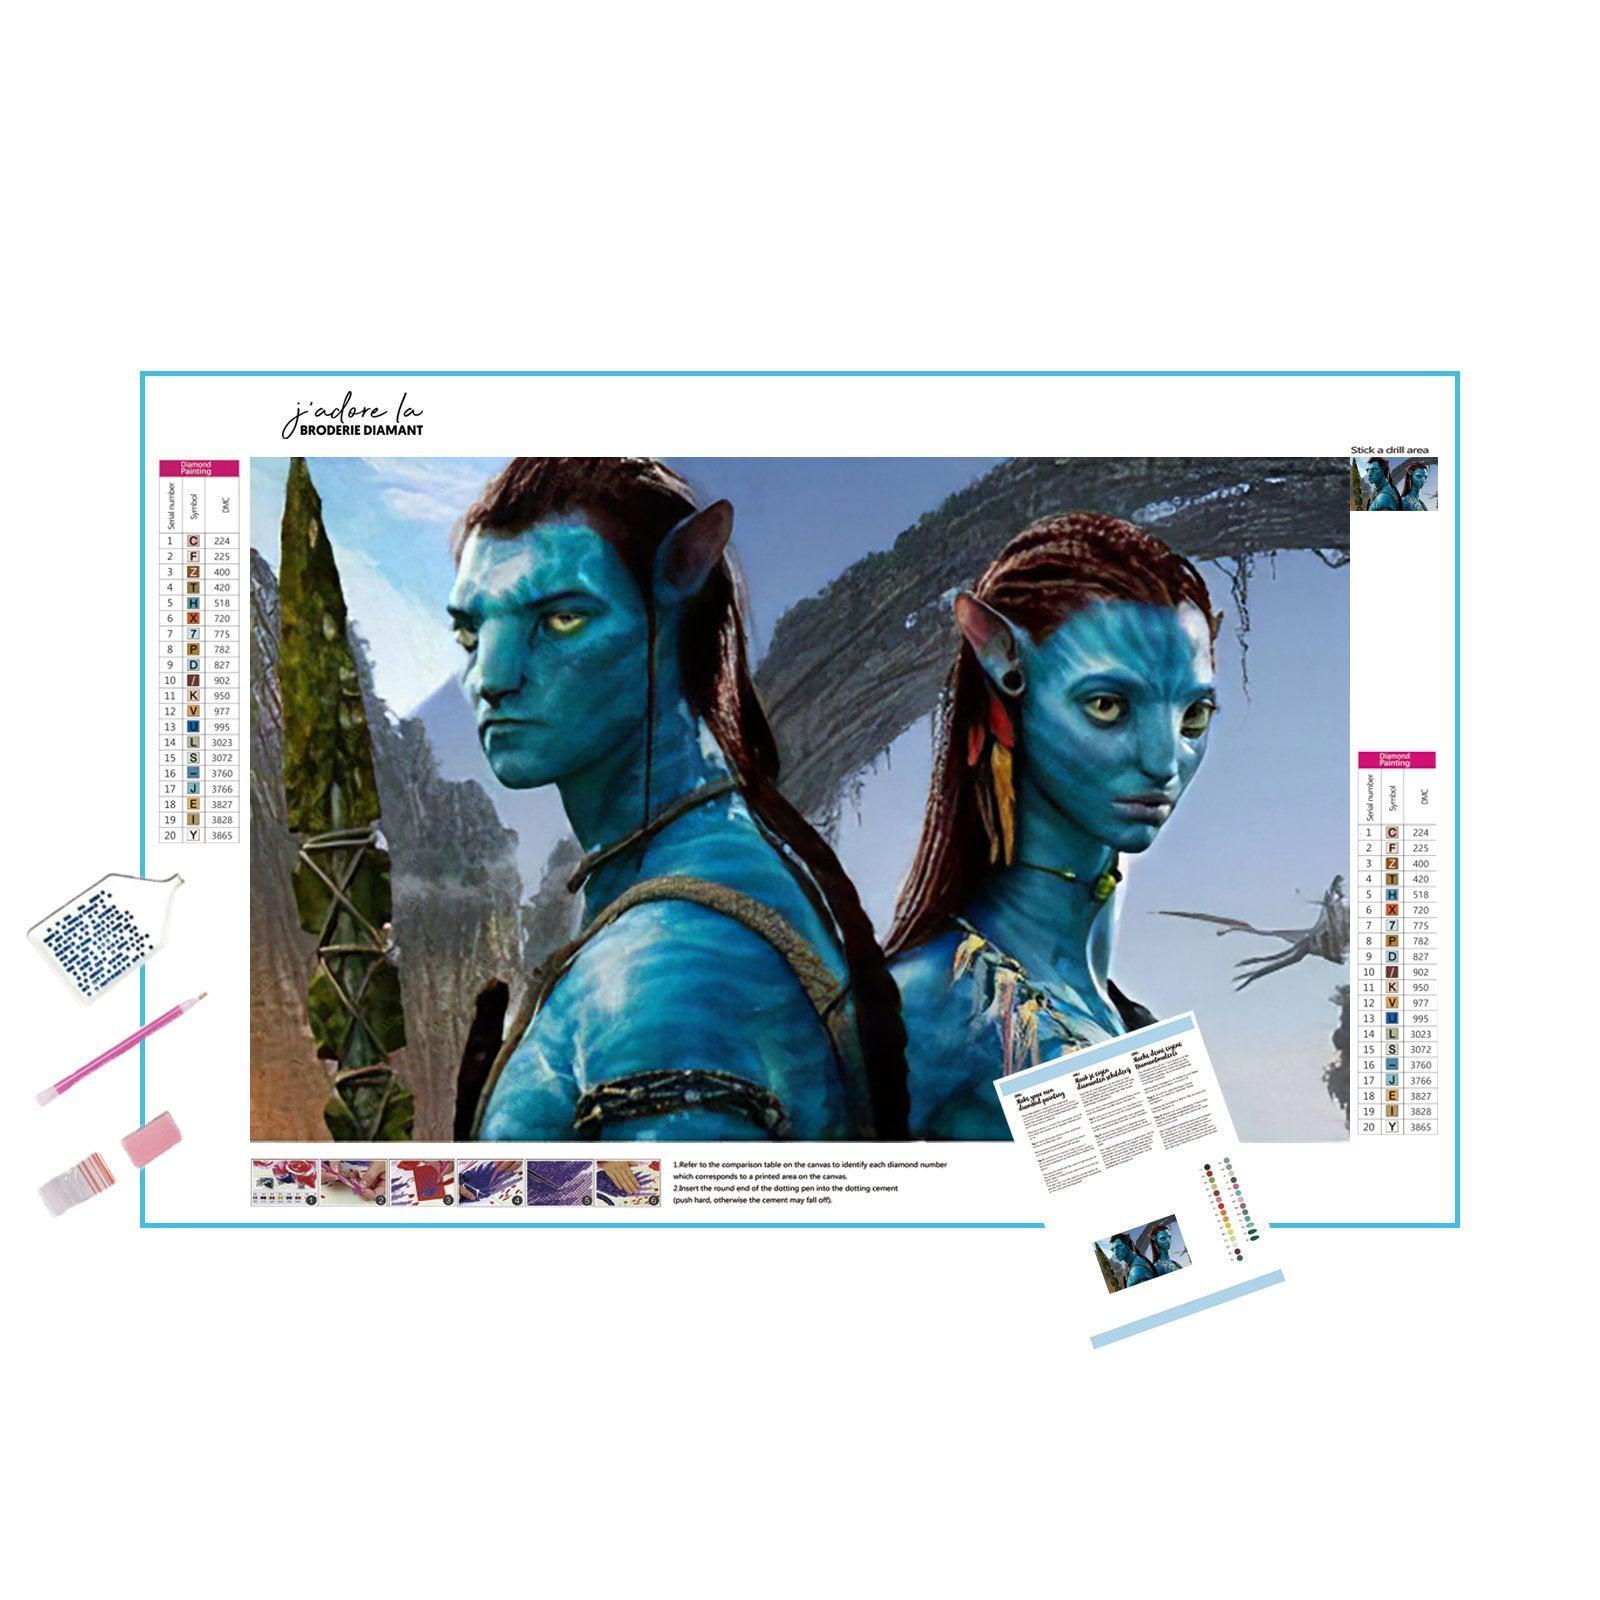 Avatar: Delve into an exotic world of wonder Avatar - Diamondartlove